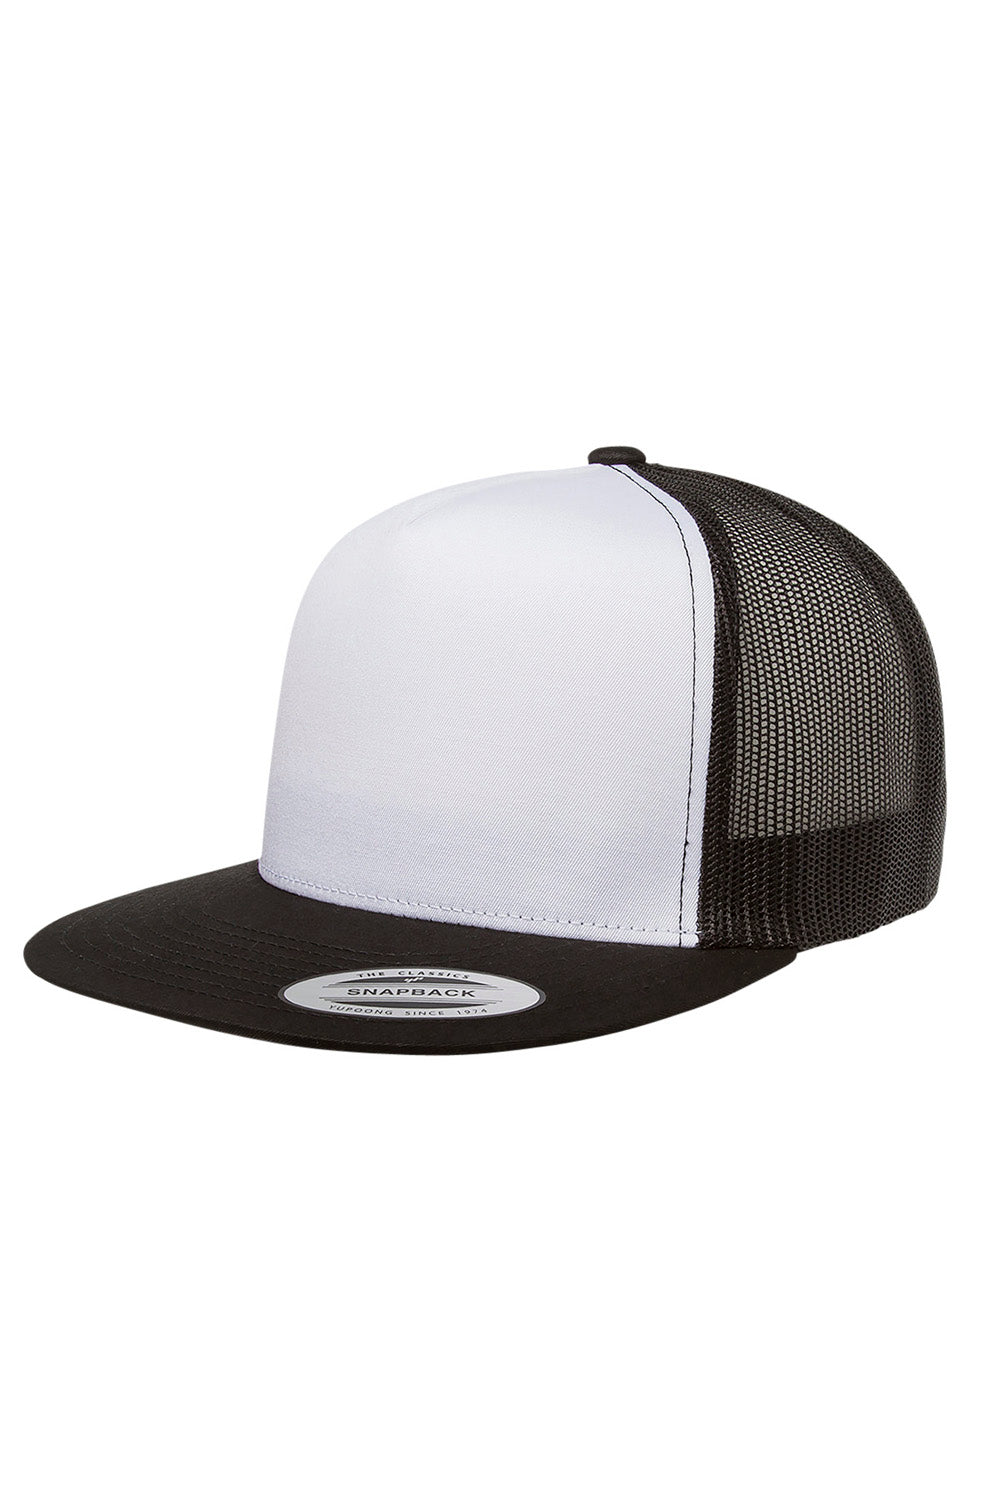 Yupoong Mens Adjustable Trucker Hat - Black/White